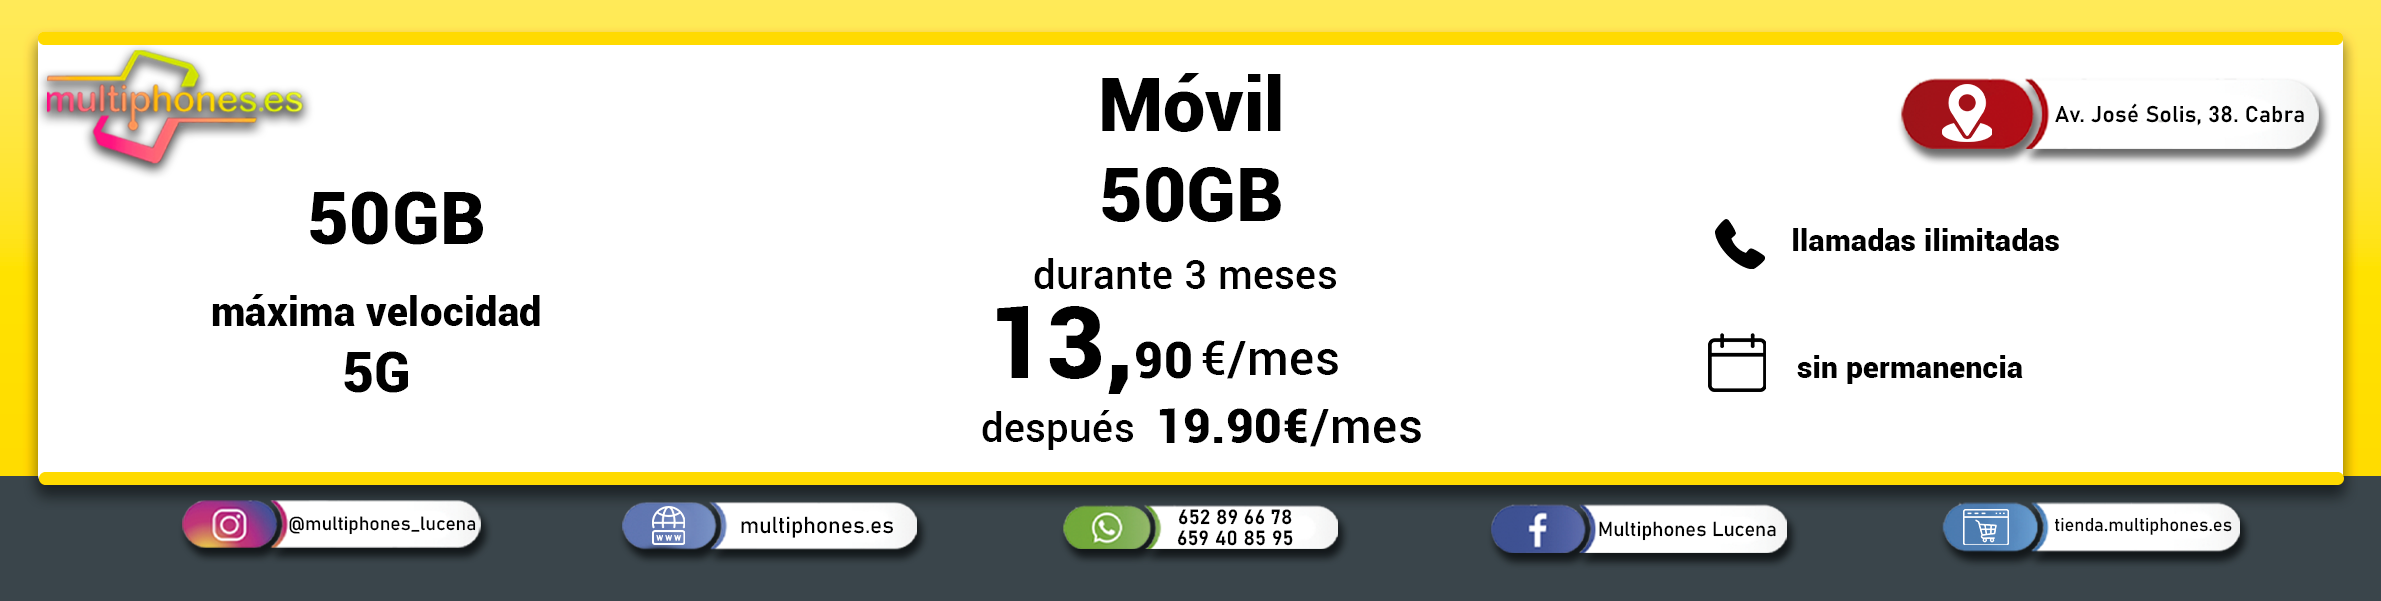 MASMOVIL – MÓVIL 50GB y llamadas ilimitadas.